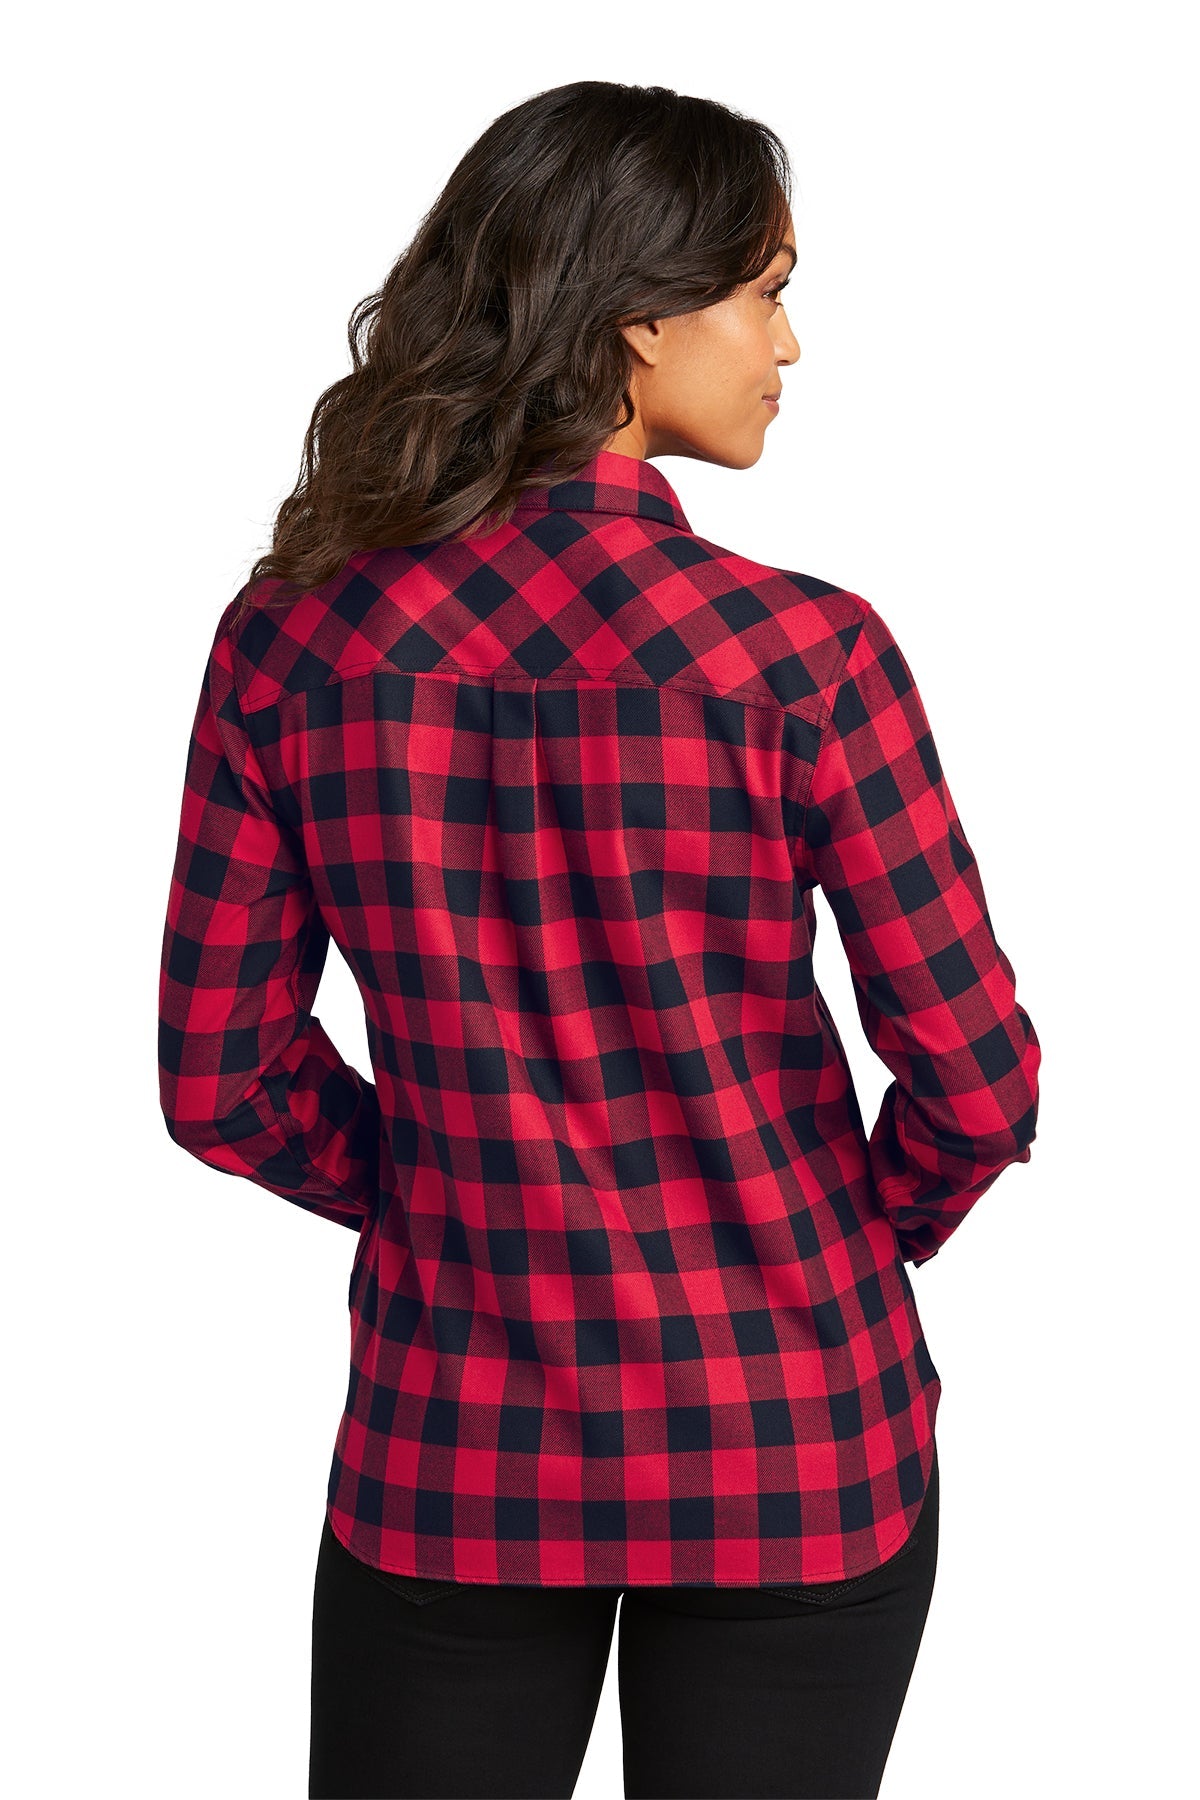 Port Authority Ladies Custom Plaid Flannel Shirts, Red/ Black Buffalo Check